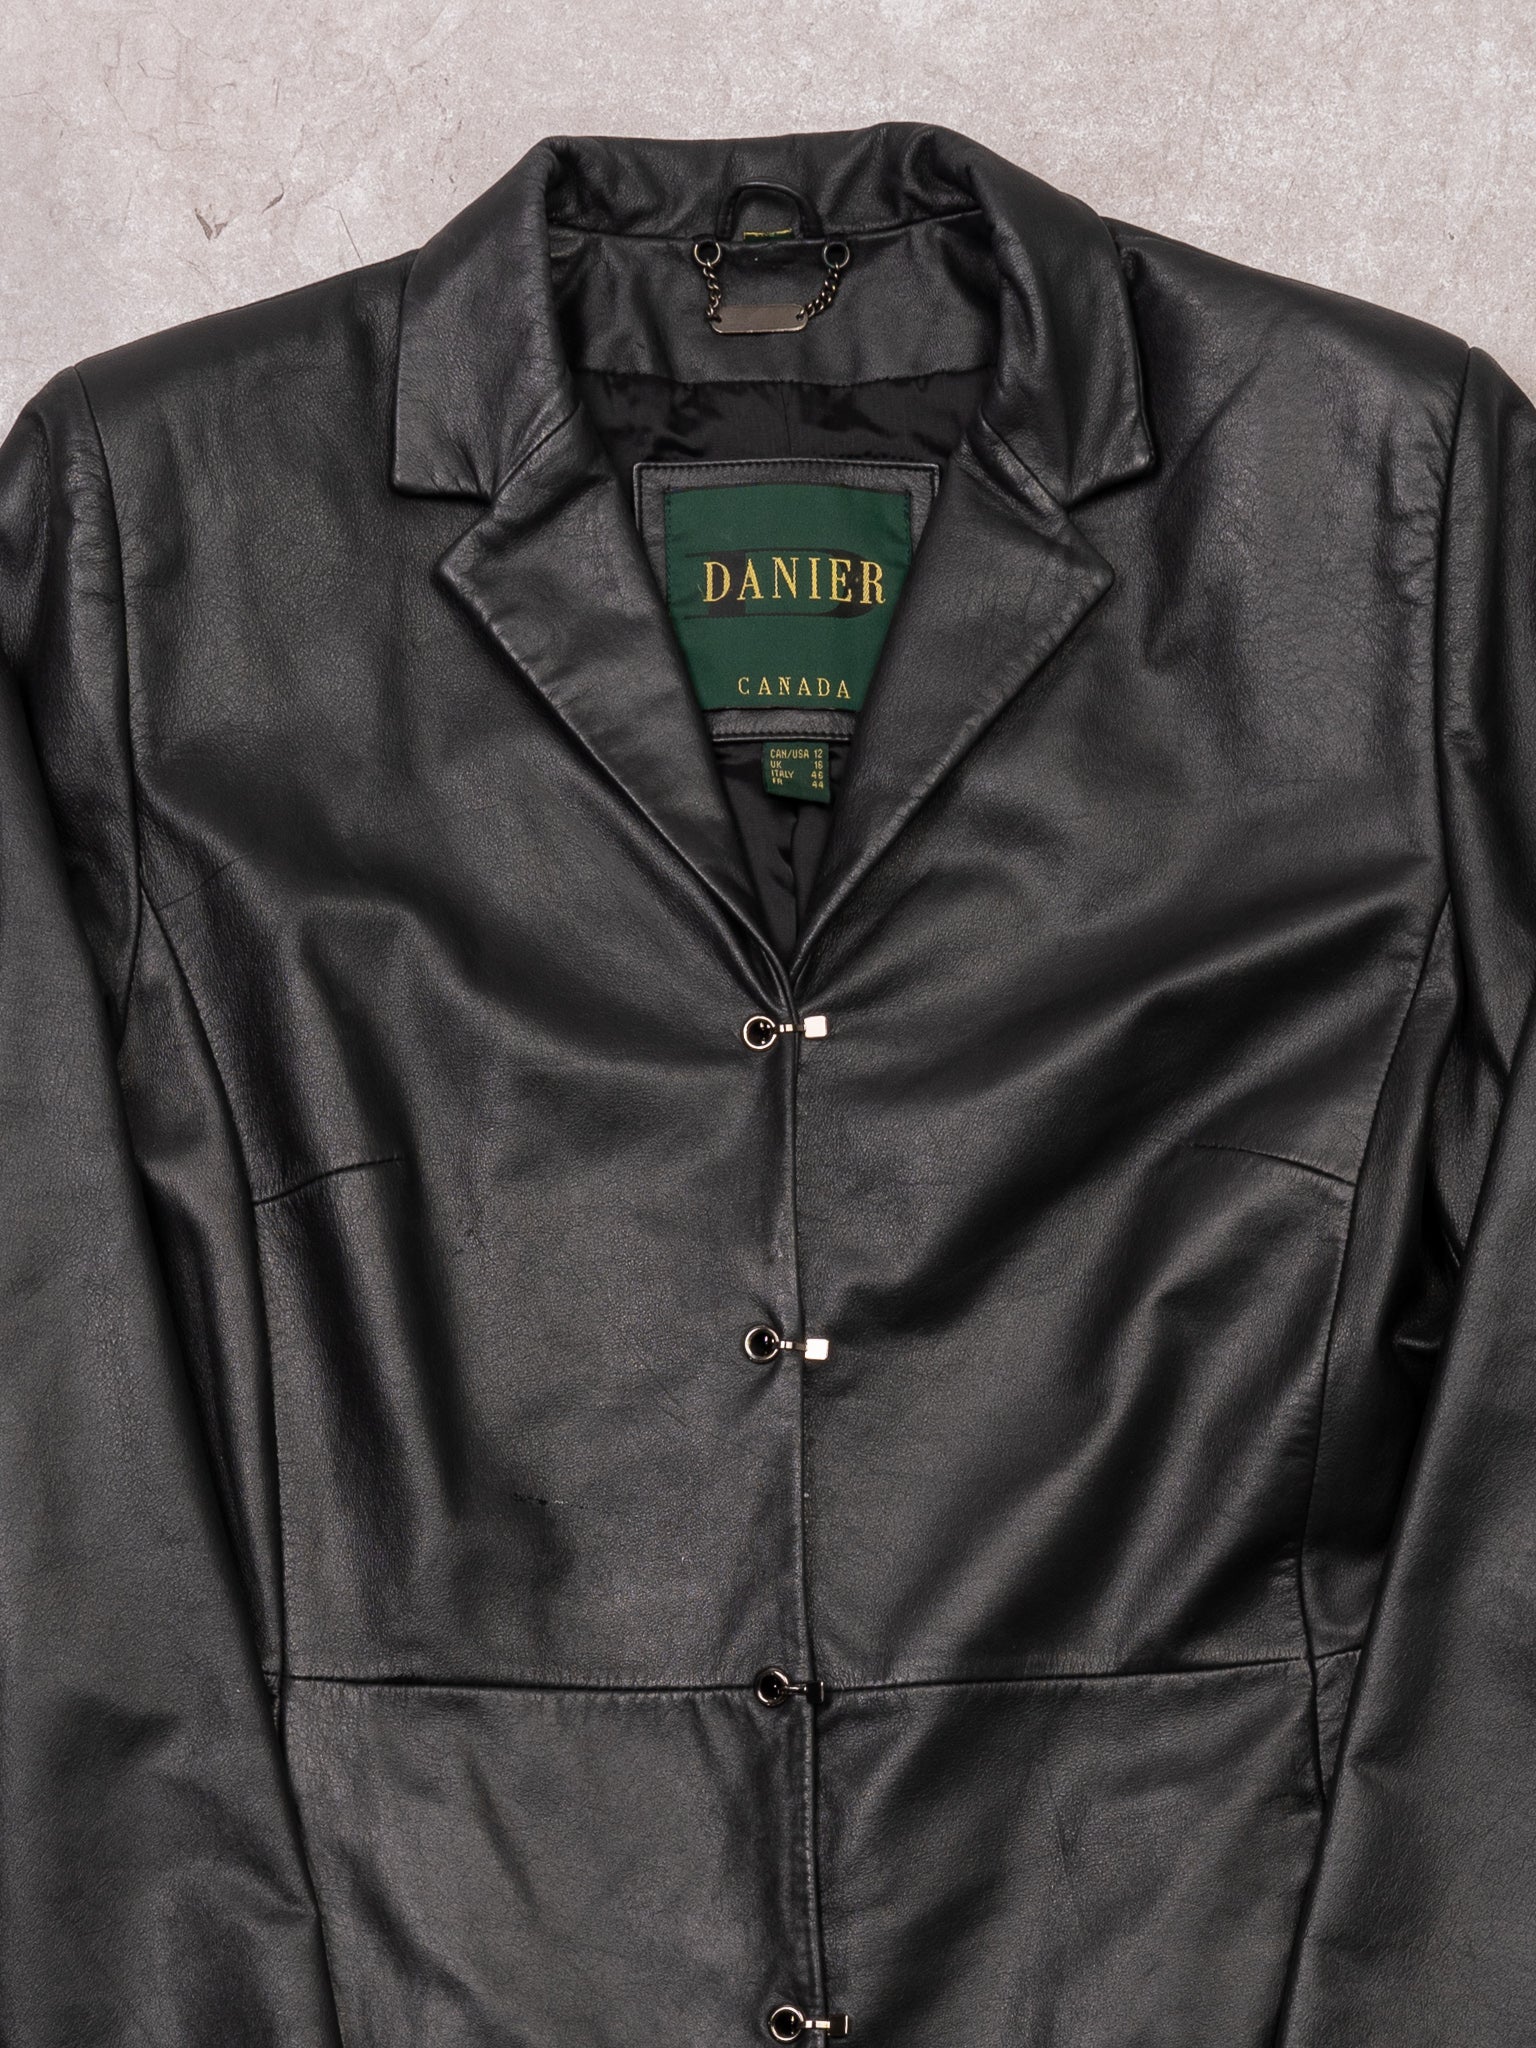 Vintage 90s Black Long Leather Clasp Jacket (S/M)